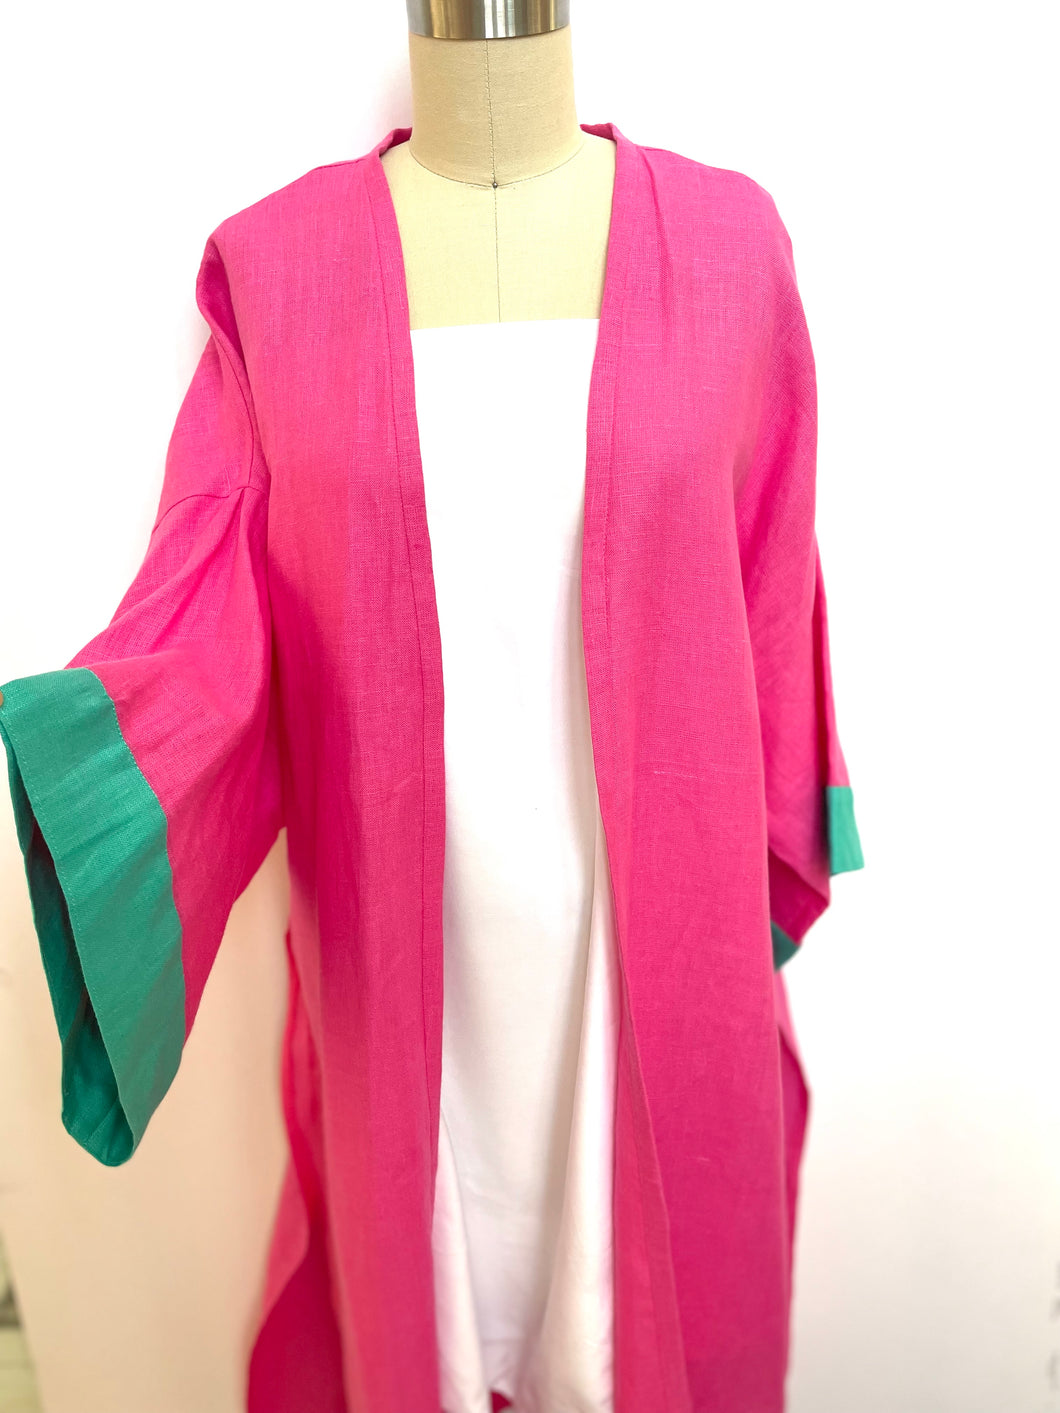 Cozumel Kimono Pink/Turquoise